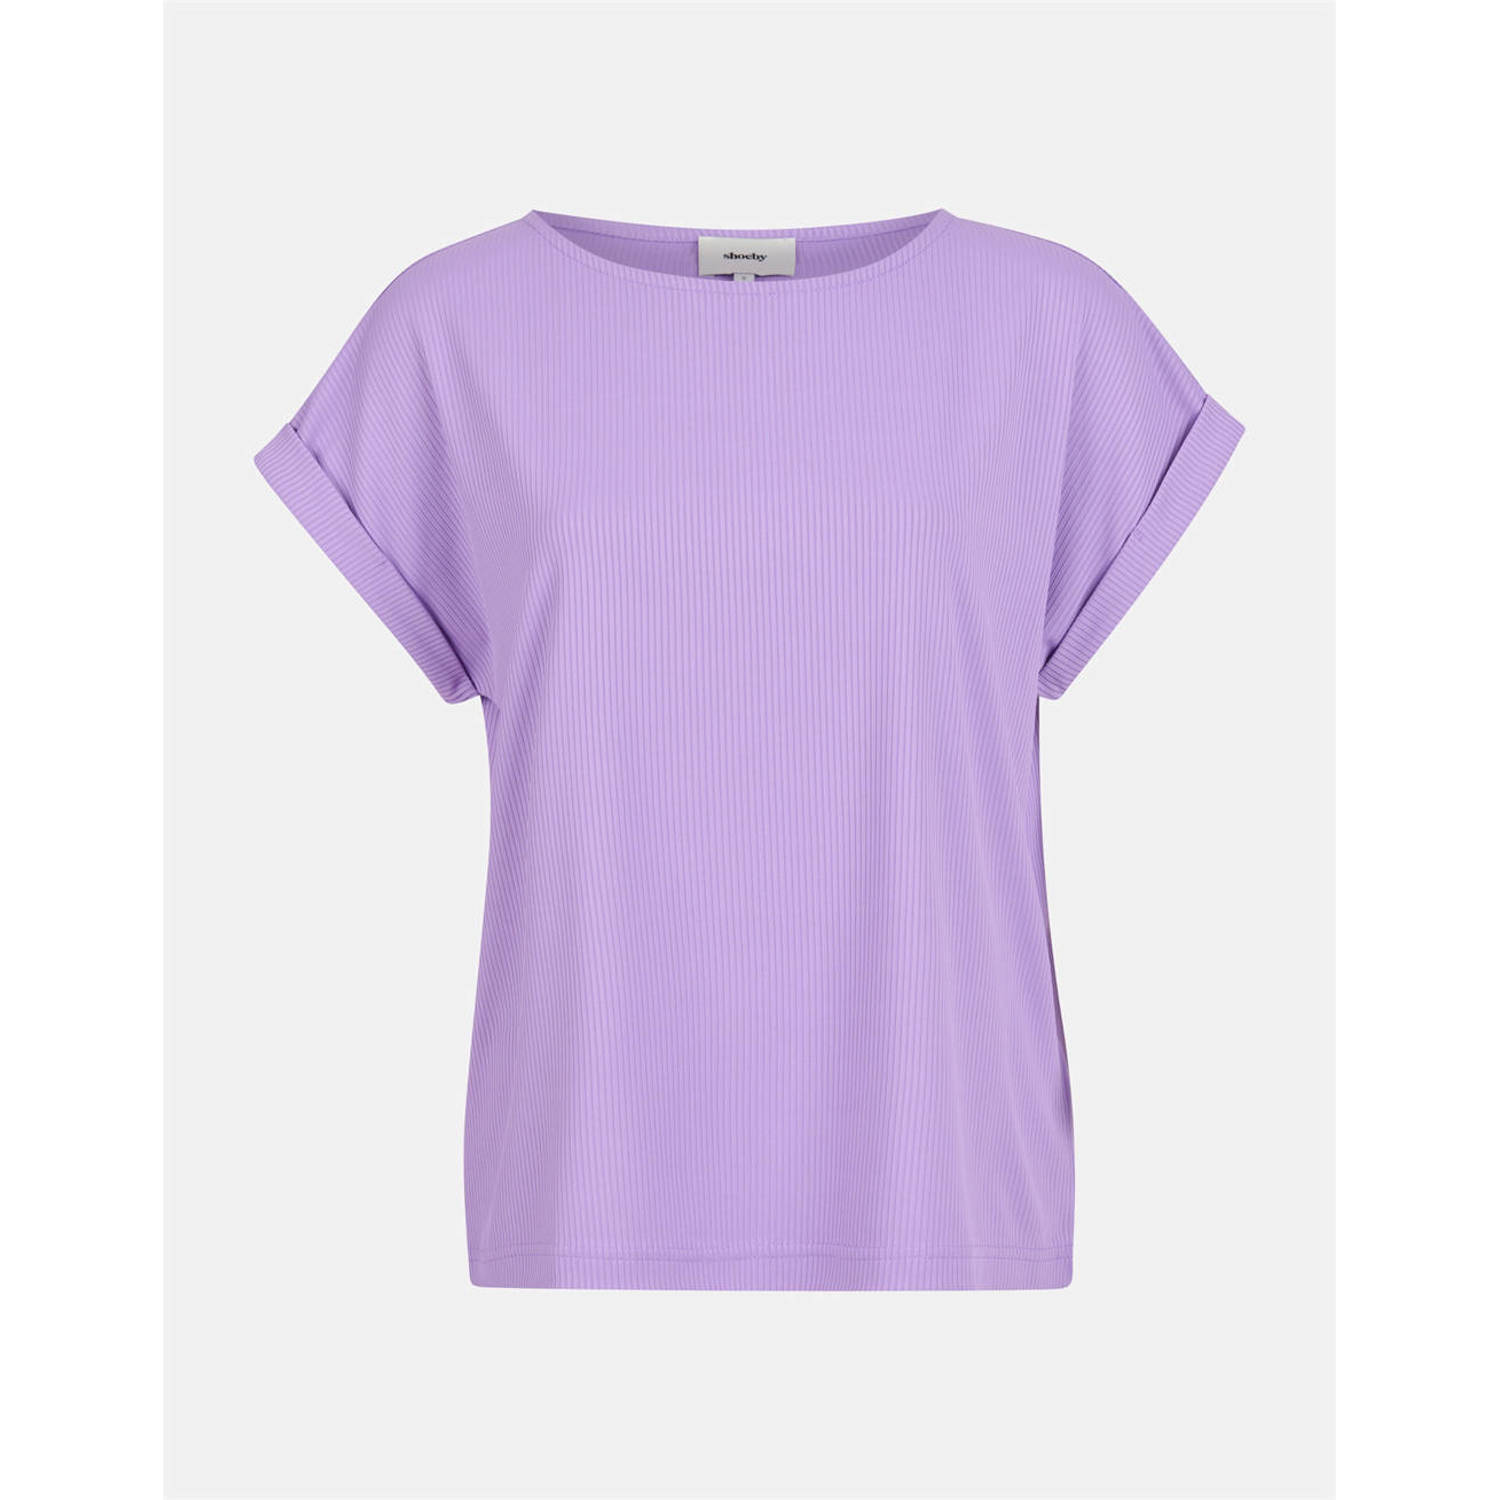 Shoeby jersey T-shirt lila